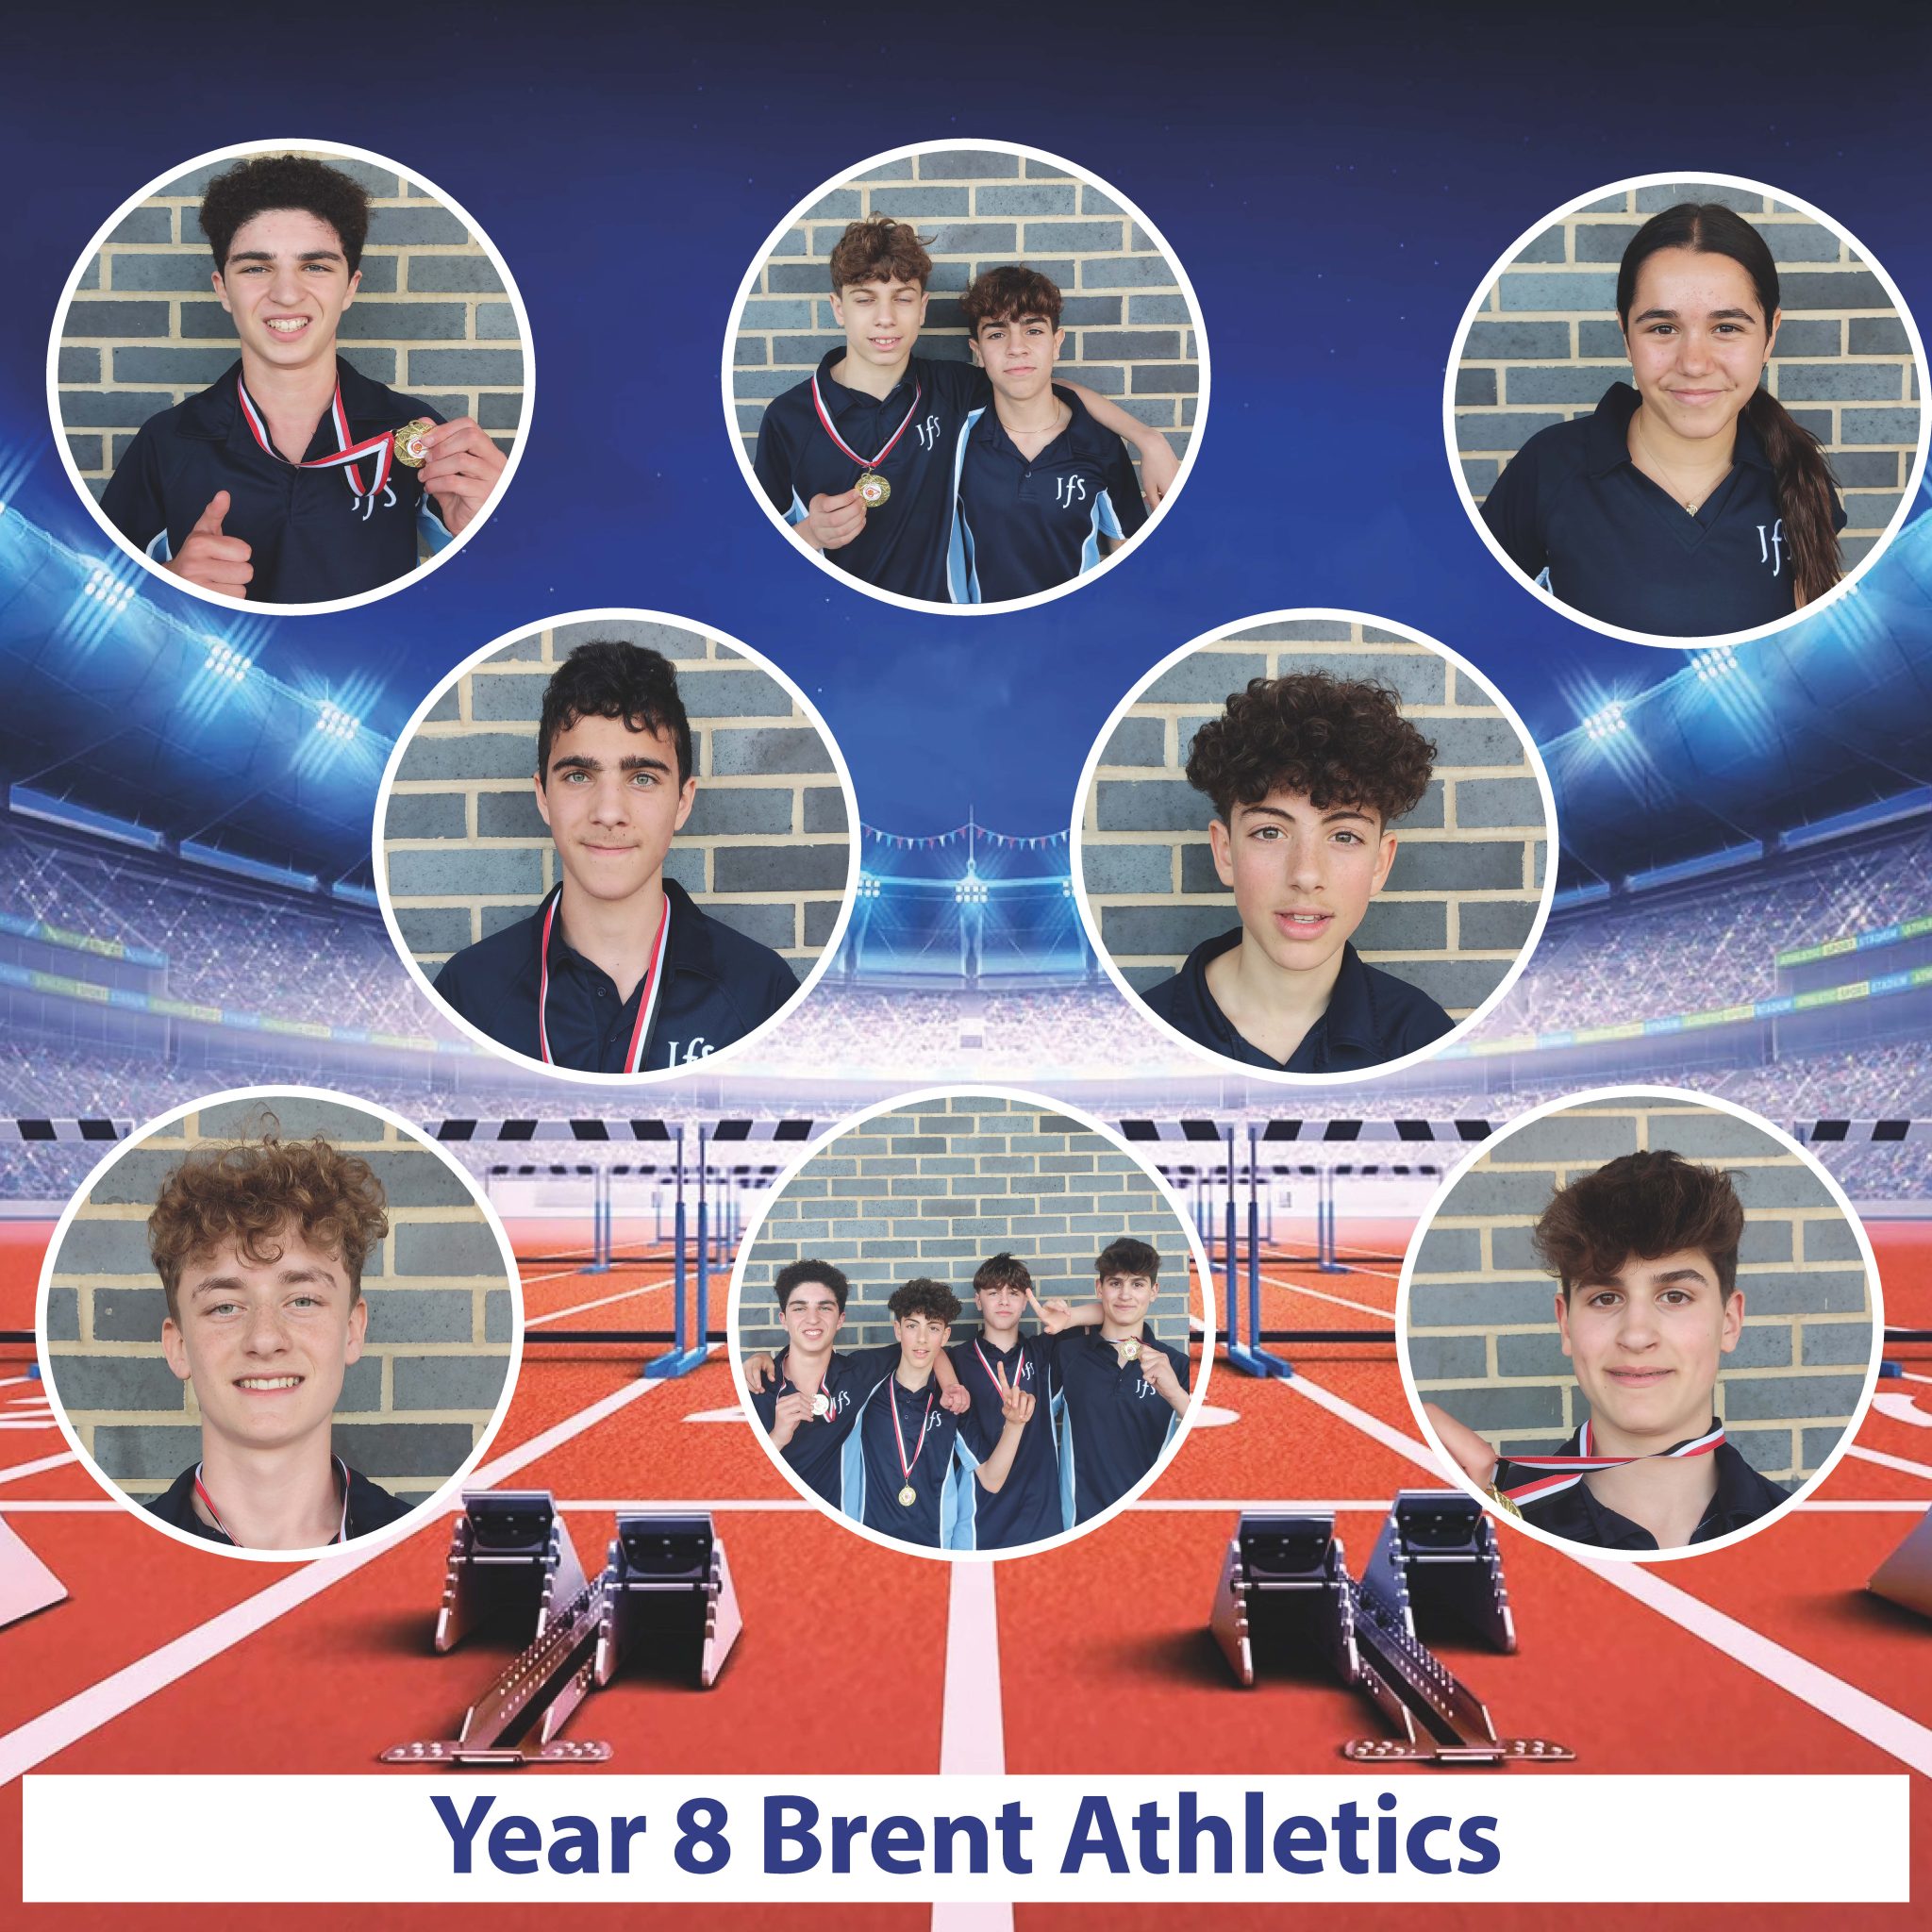 Year 8 Brent Athletics